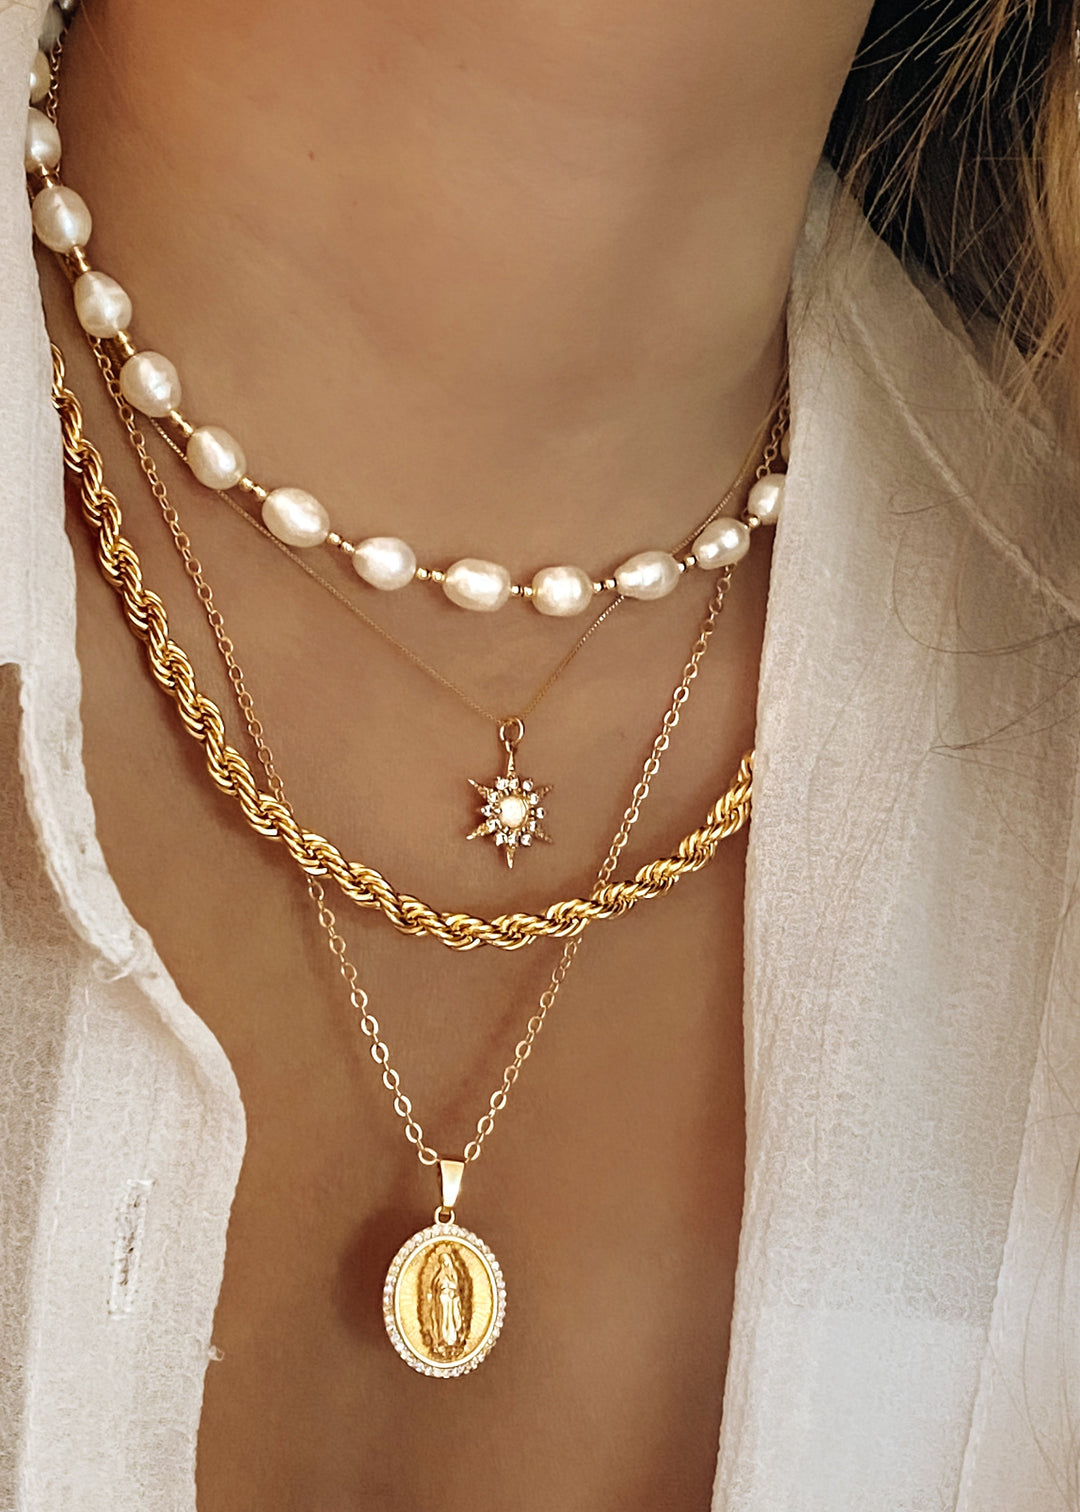 Shiny Northstar Necklace - Gold Filled